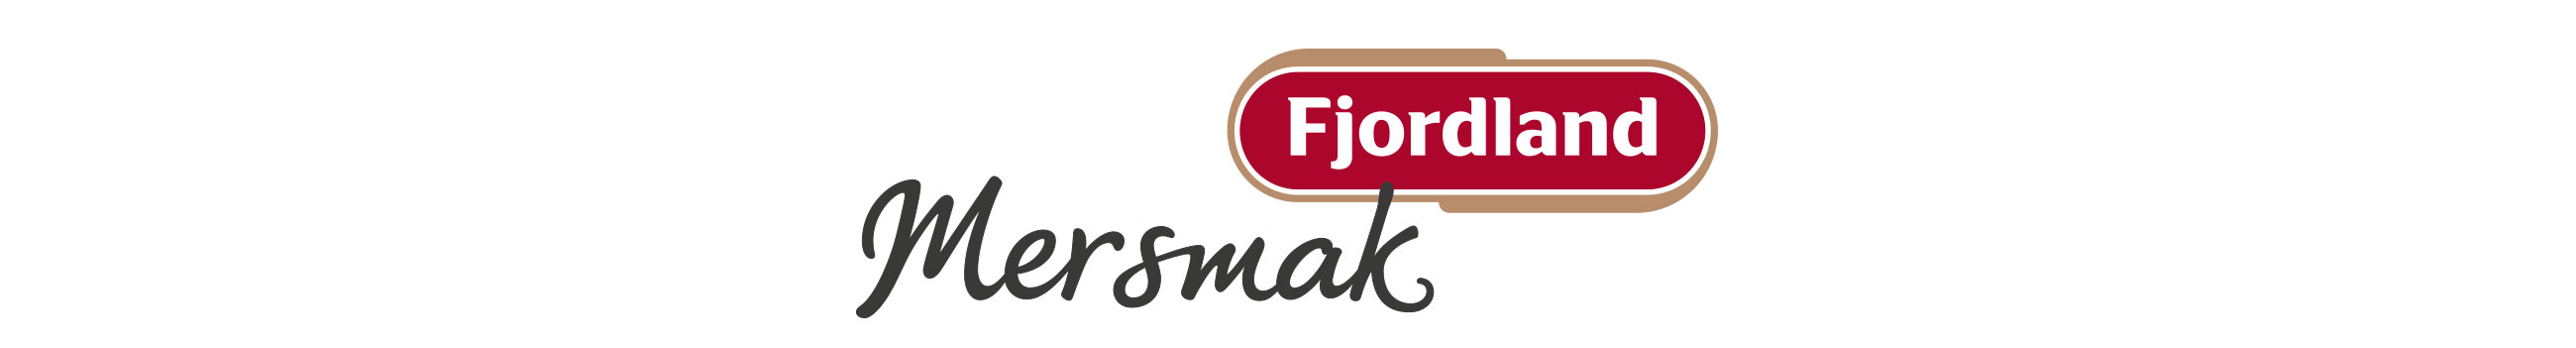 Fjordland Mersmak logo. Visuell identitet visual identity.